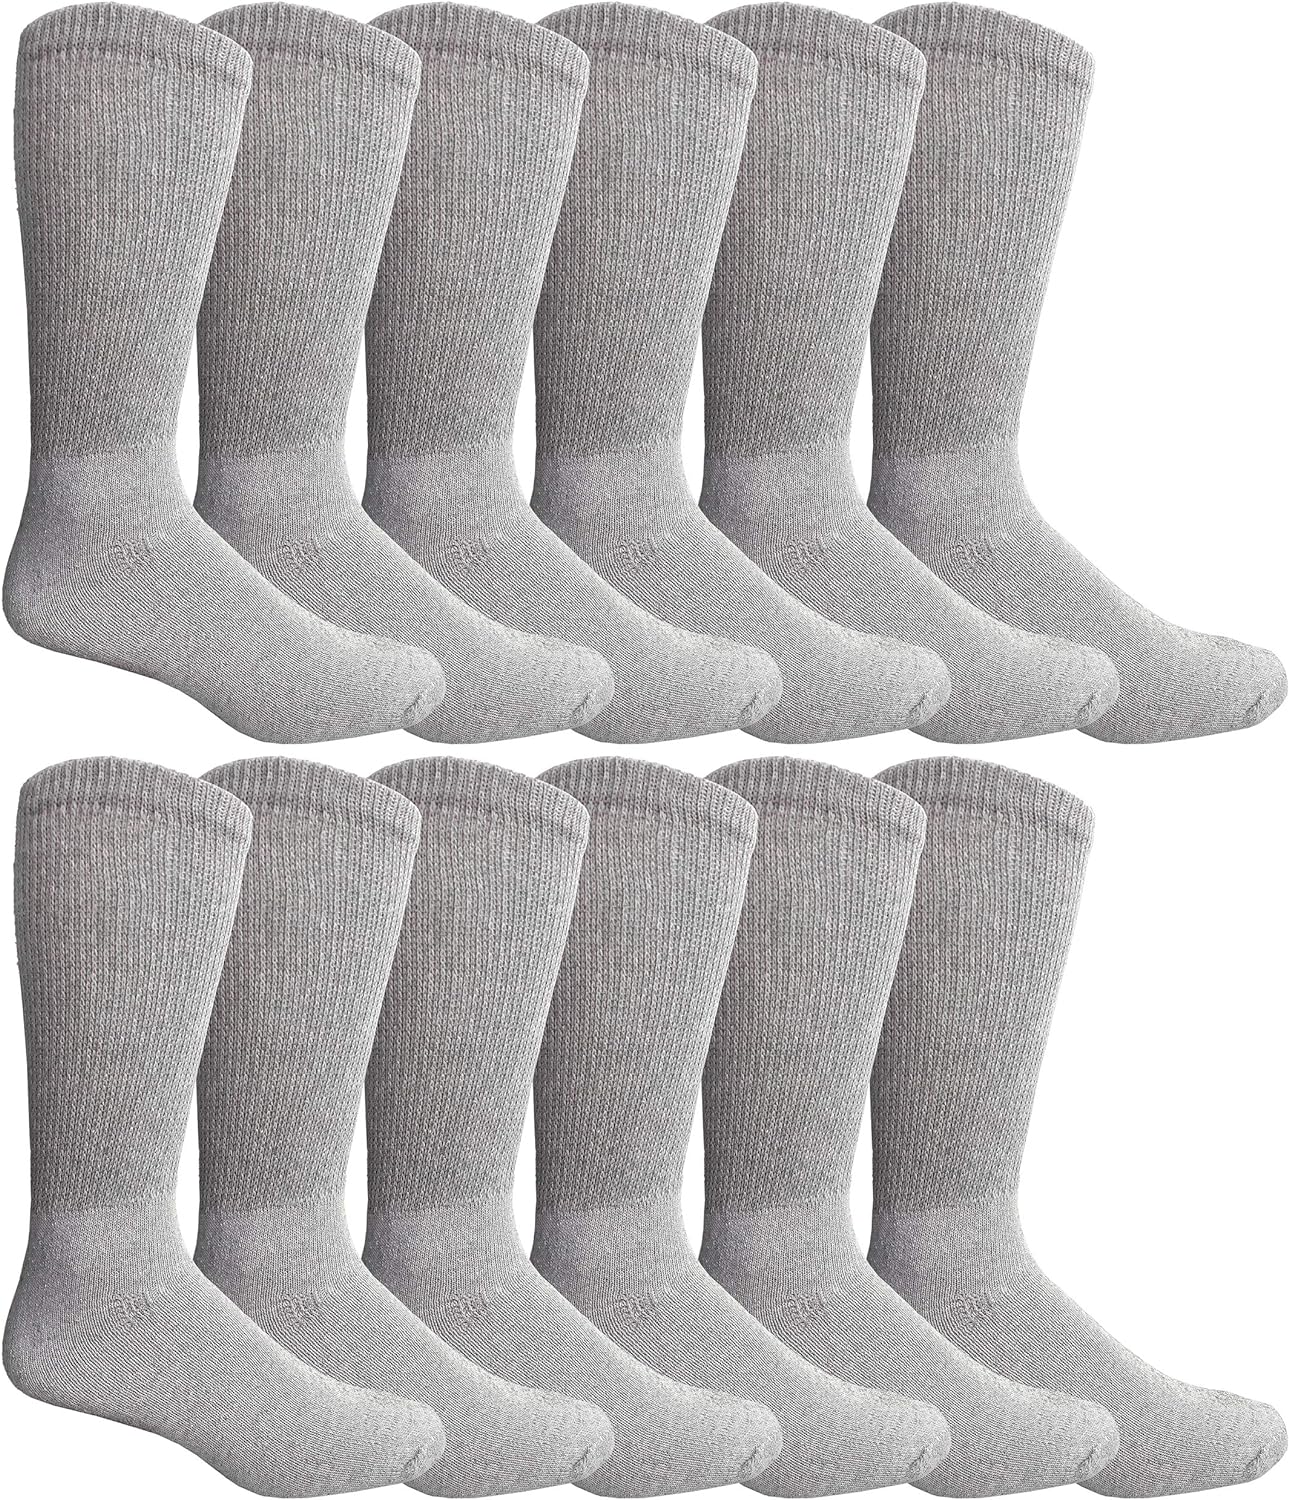 Yacht & Smith Diabetic Nephropathy Edema Socks, Cotton Crew, Ankle, Non Slip Medical Sock (Gray Crew - 12 Pairs, 10-13)